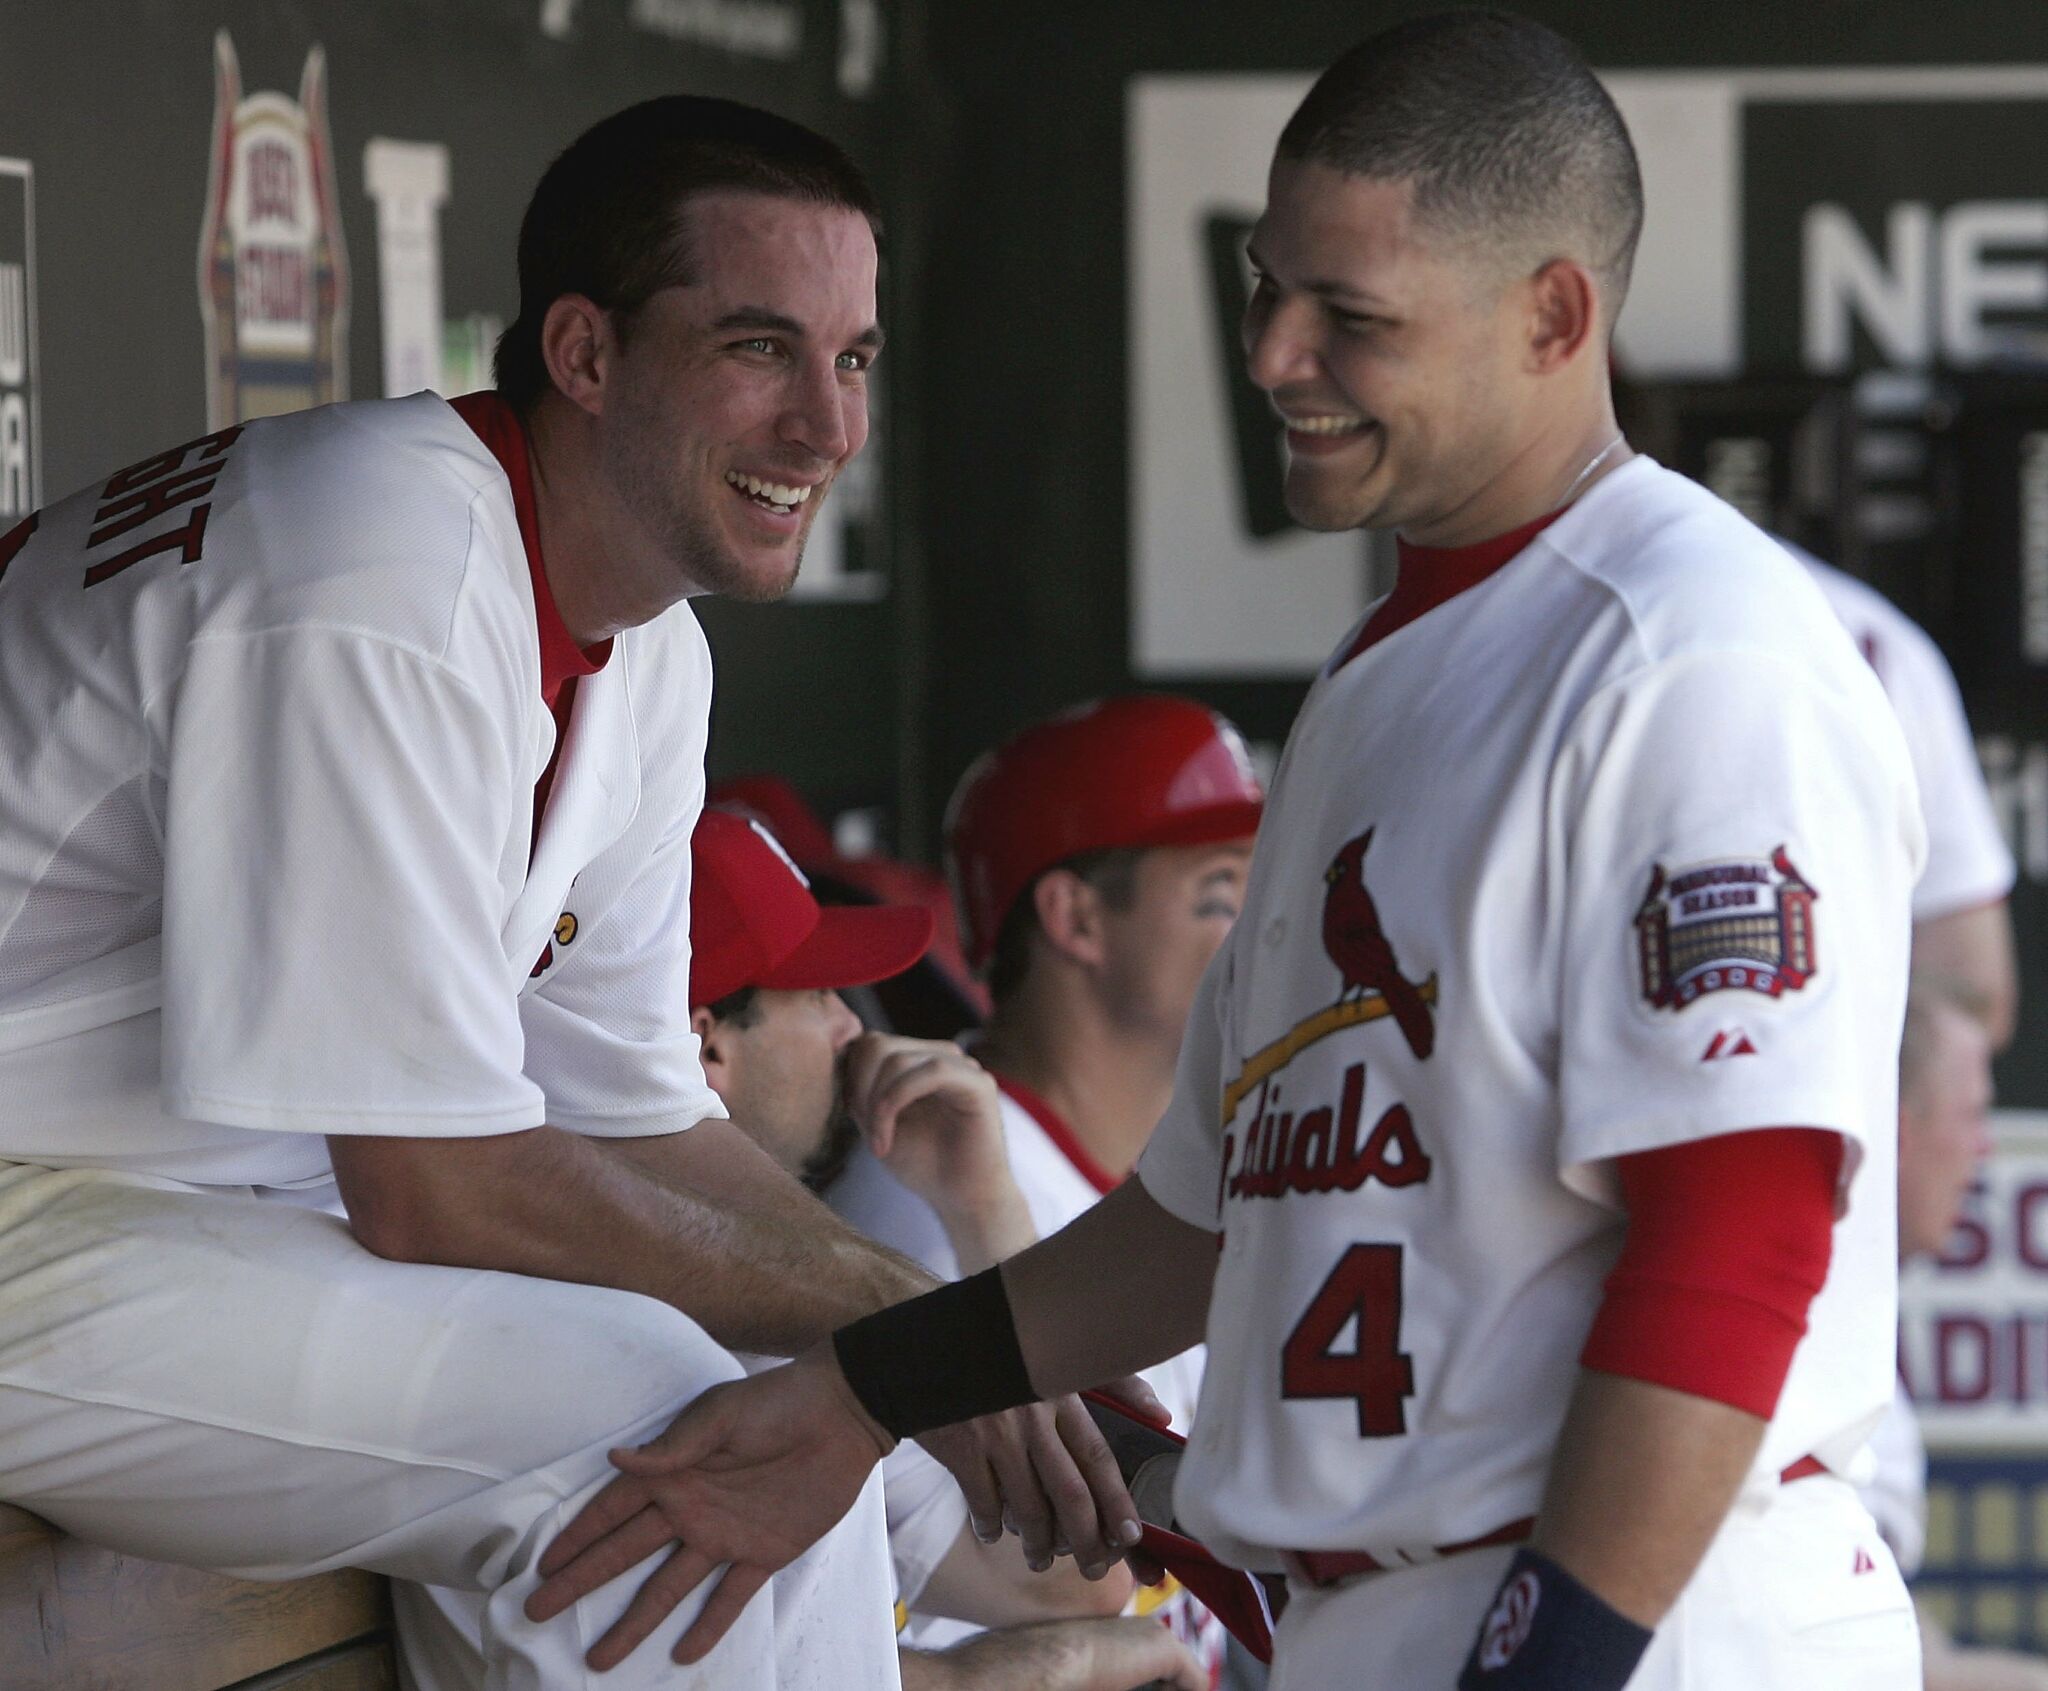 St. Louis' Anheuser-Busch salutes the baseball careers of Cardinals'  teammates Yadier Molina and Adam Wainwright